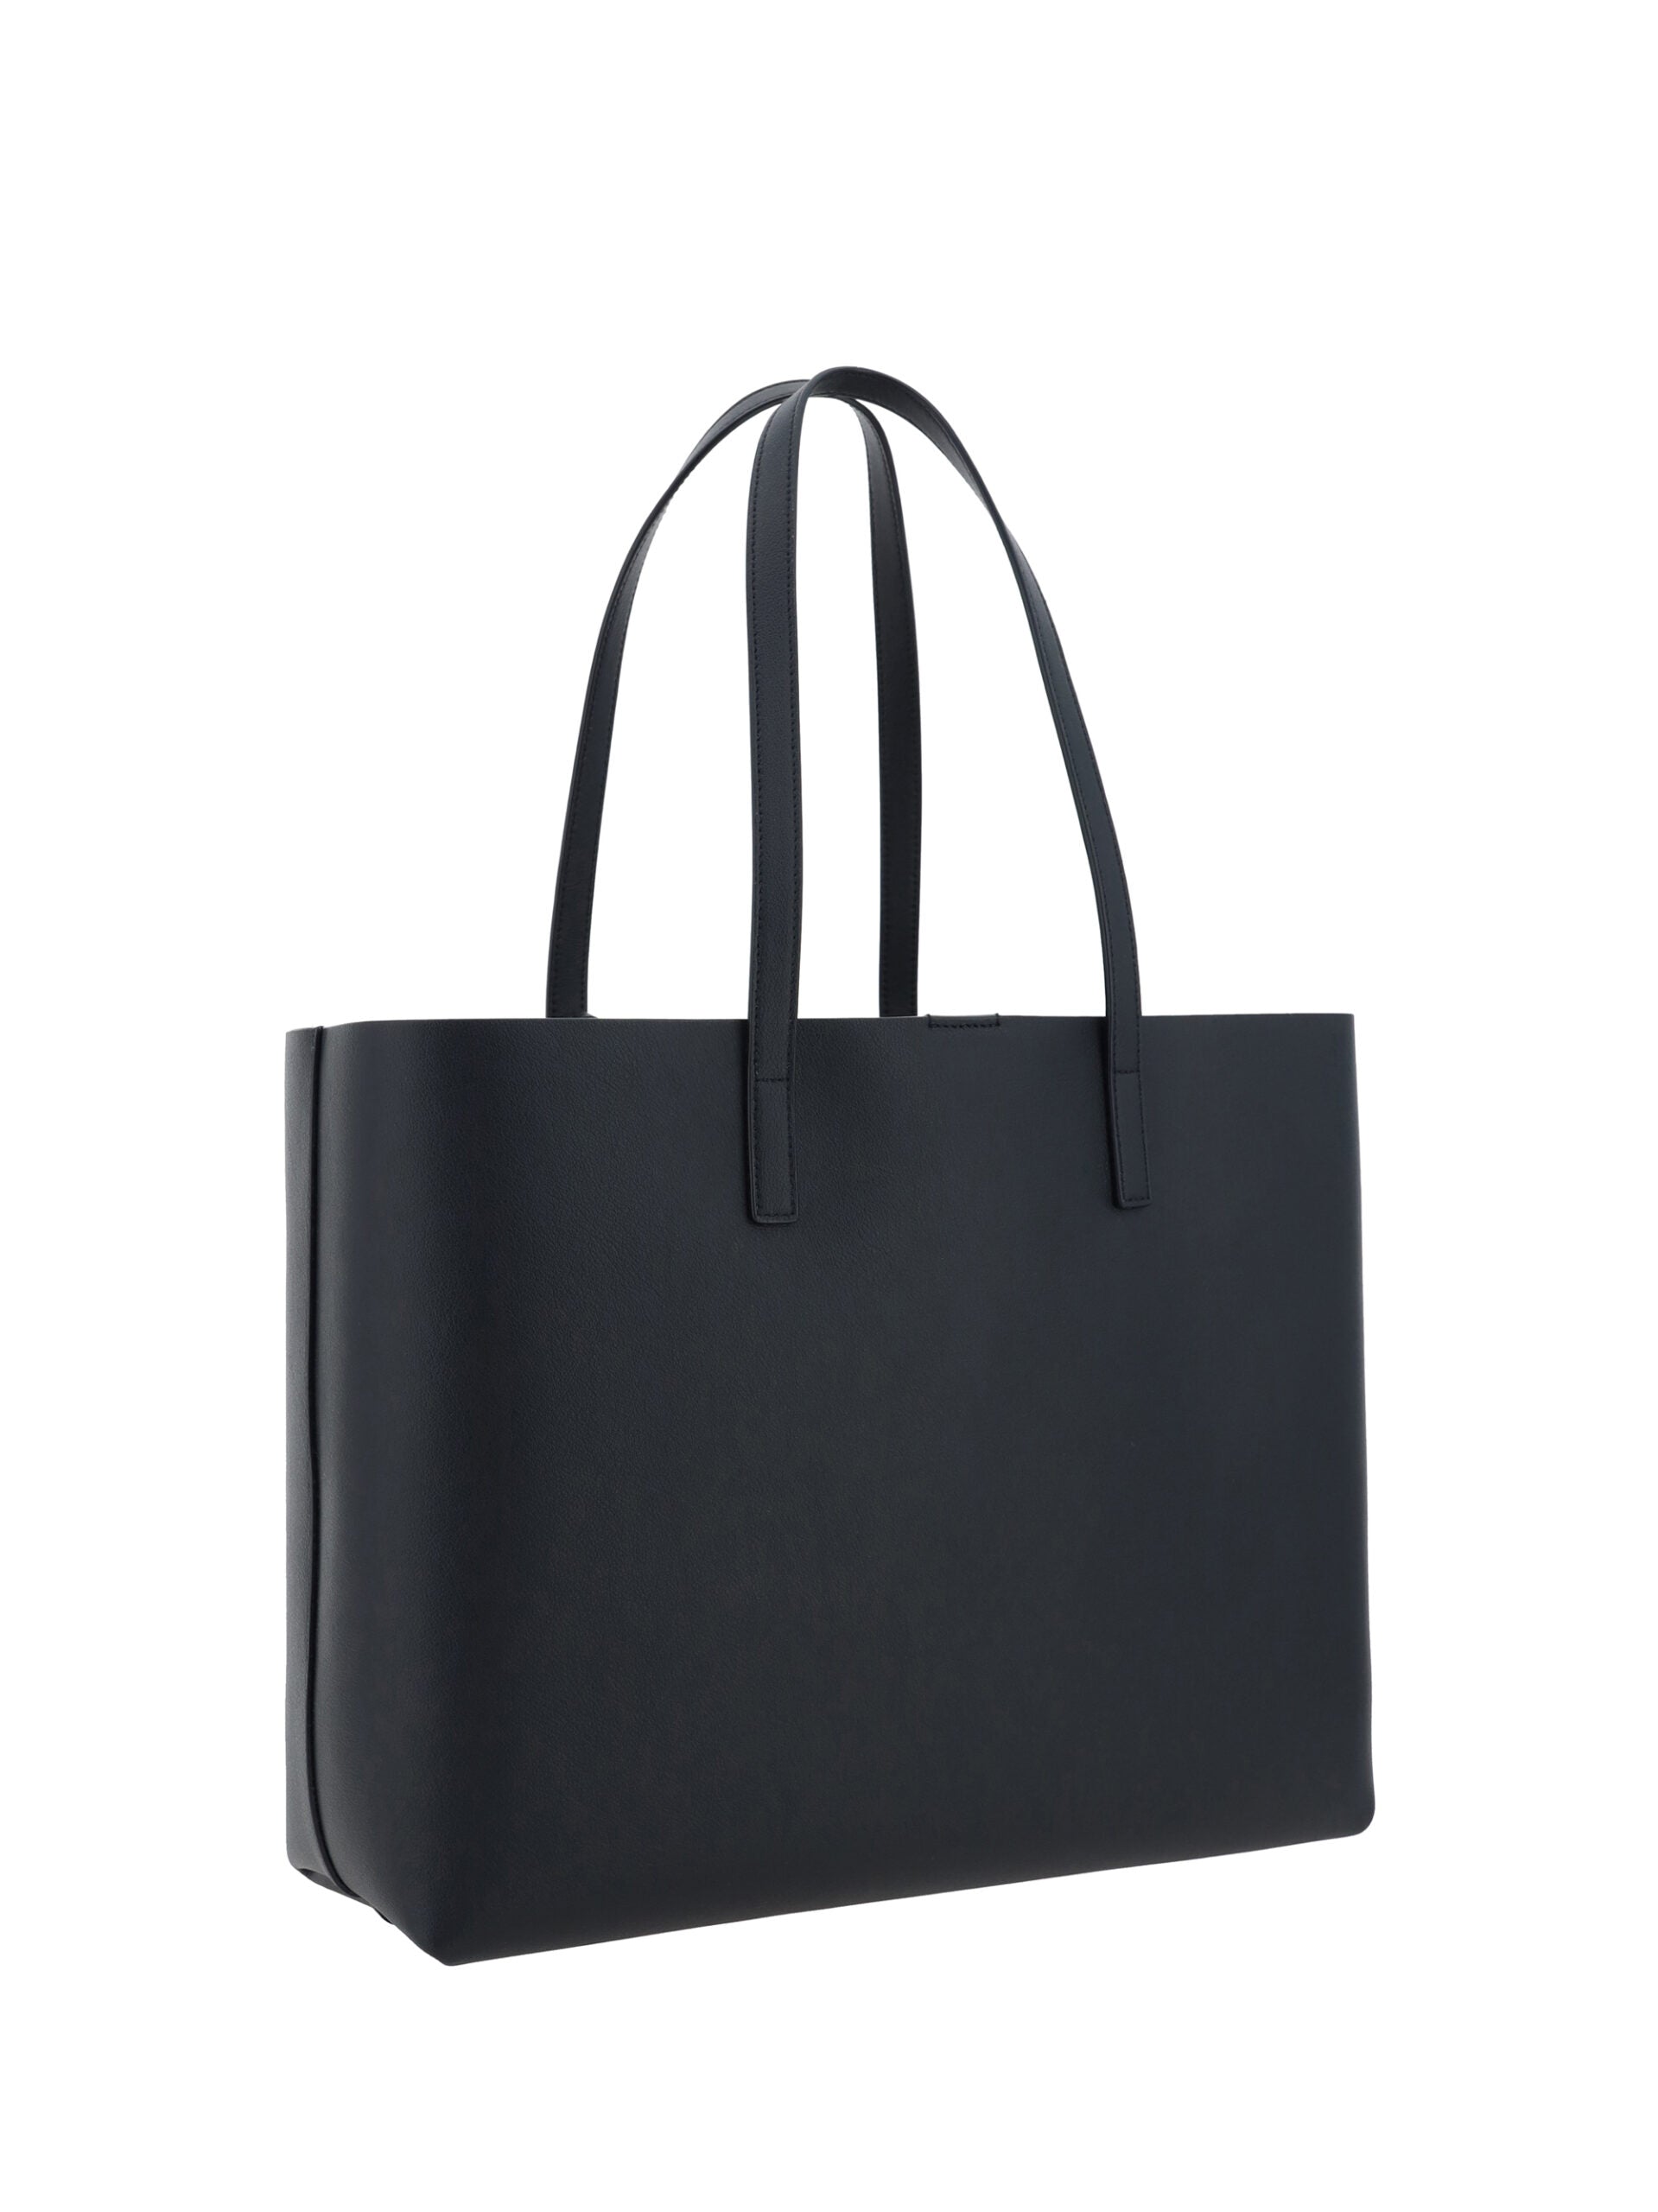 Saint Laurent Black Calf Leather Tote Shoulder Bag | Fashionsarah.com